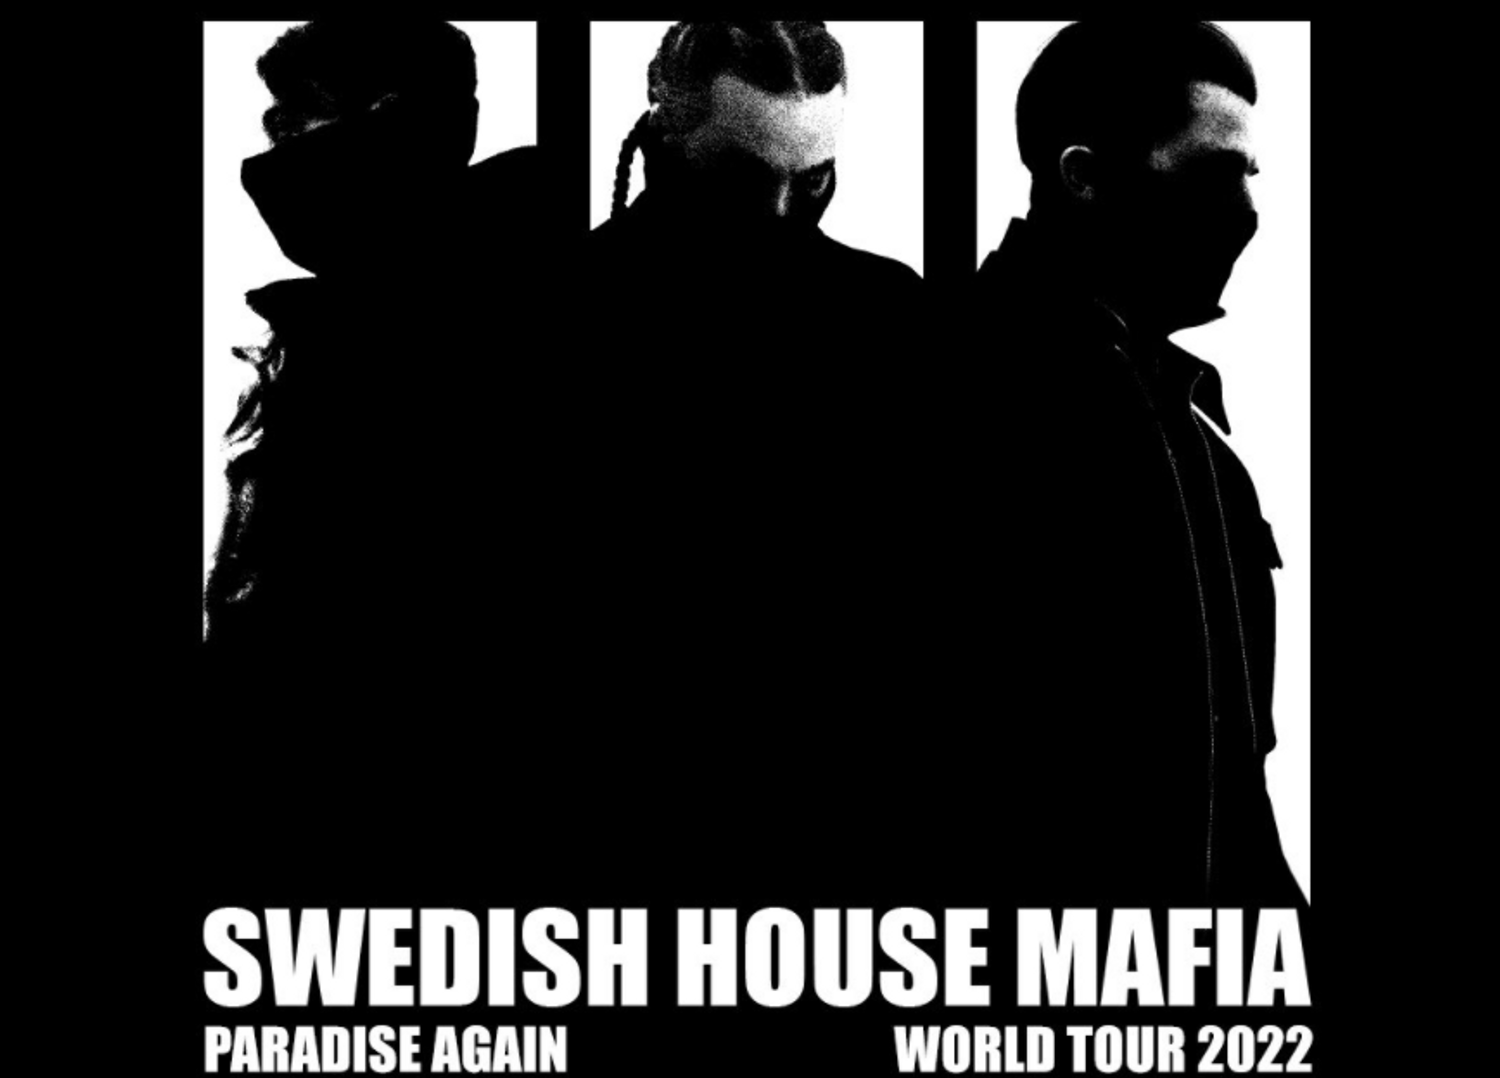 La Swedish House Mafia annonce une tournée mondiale